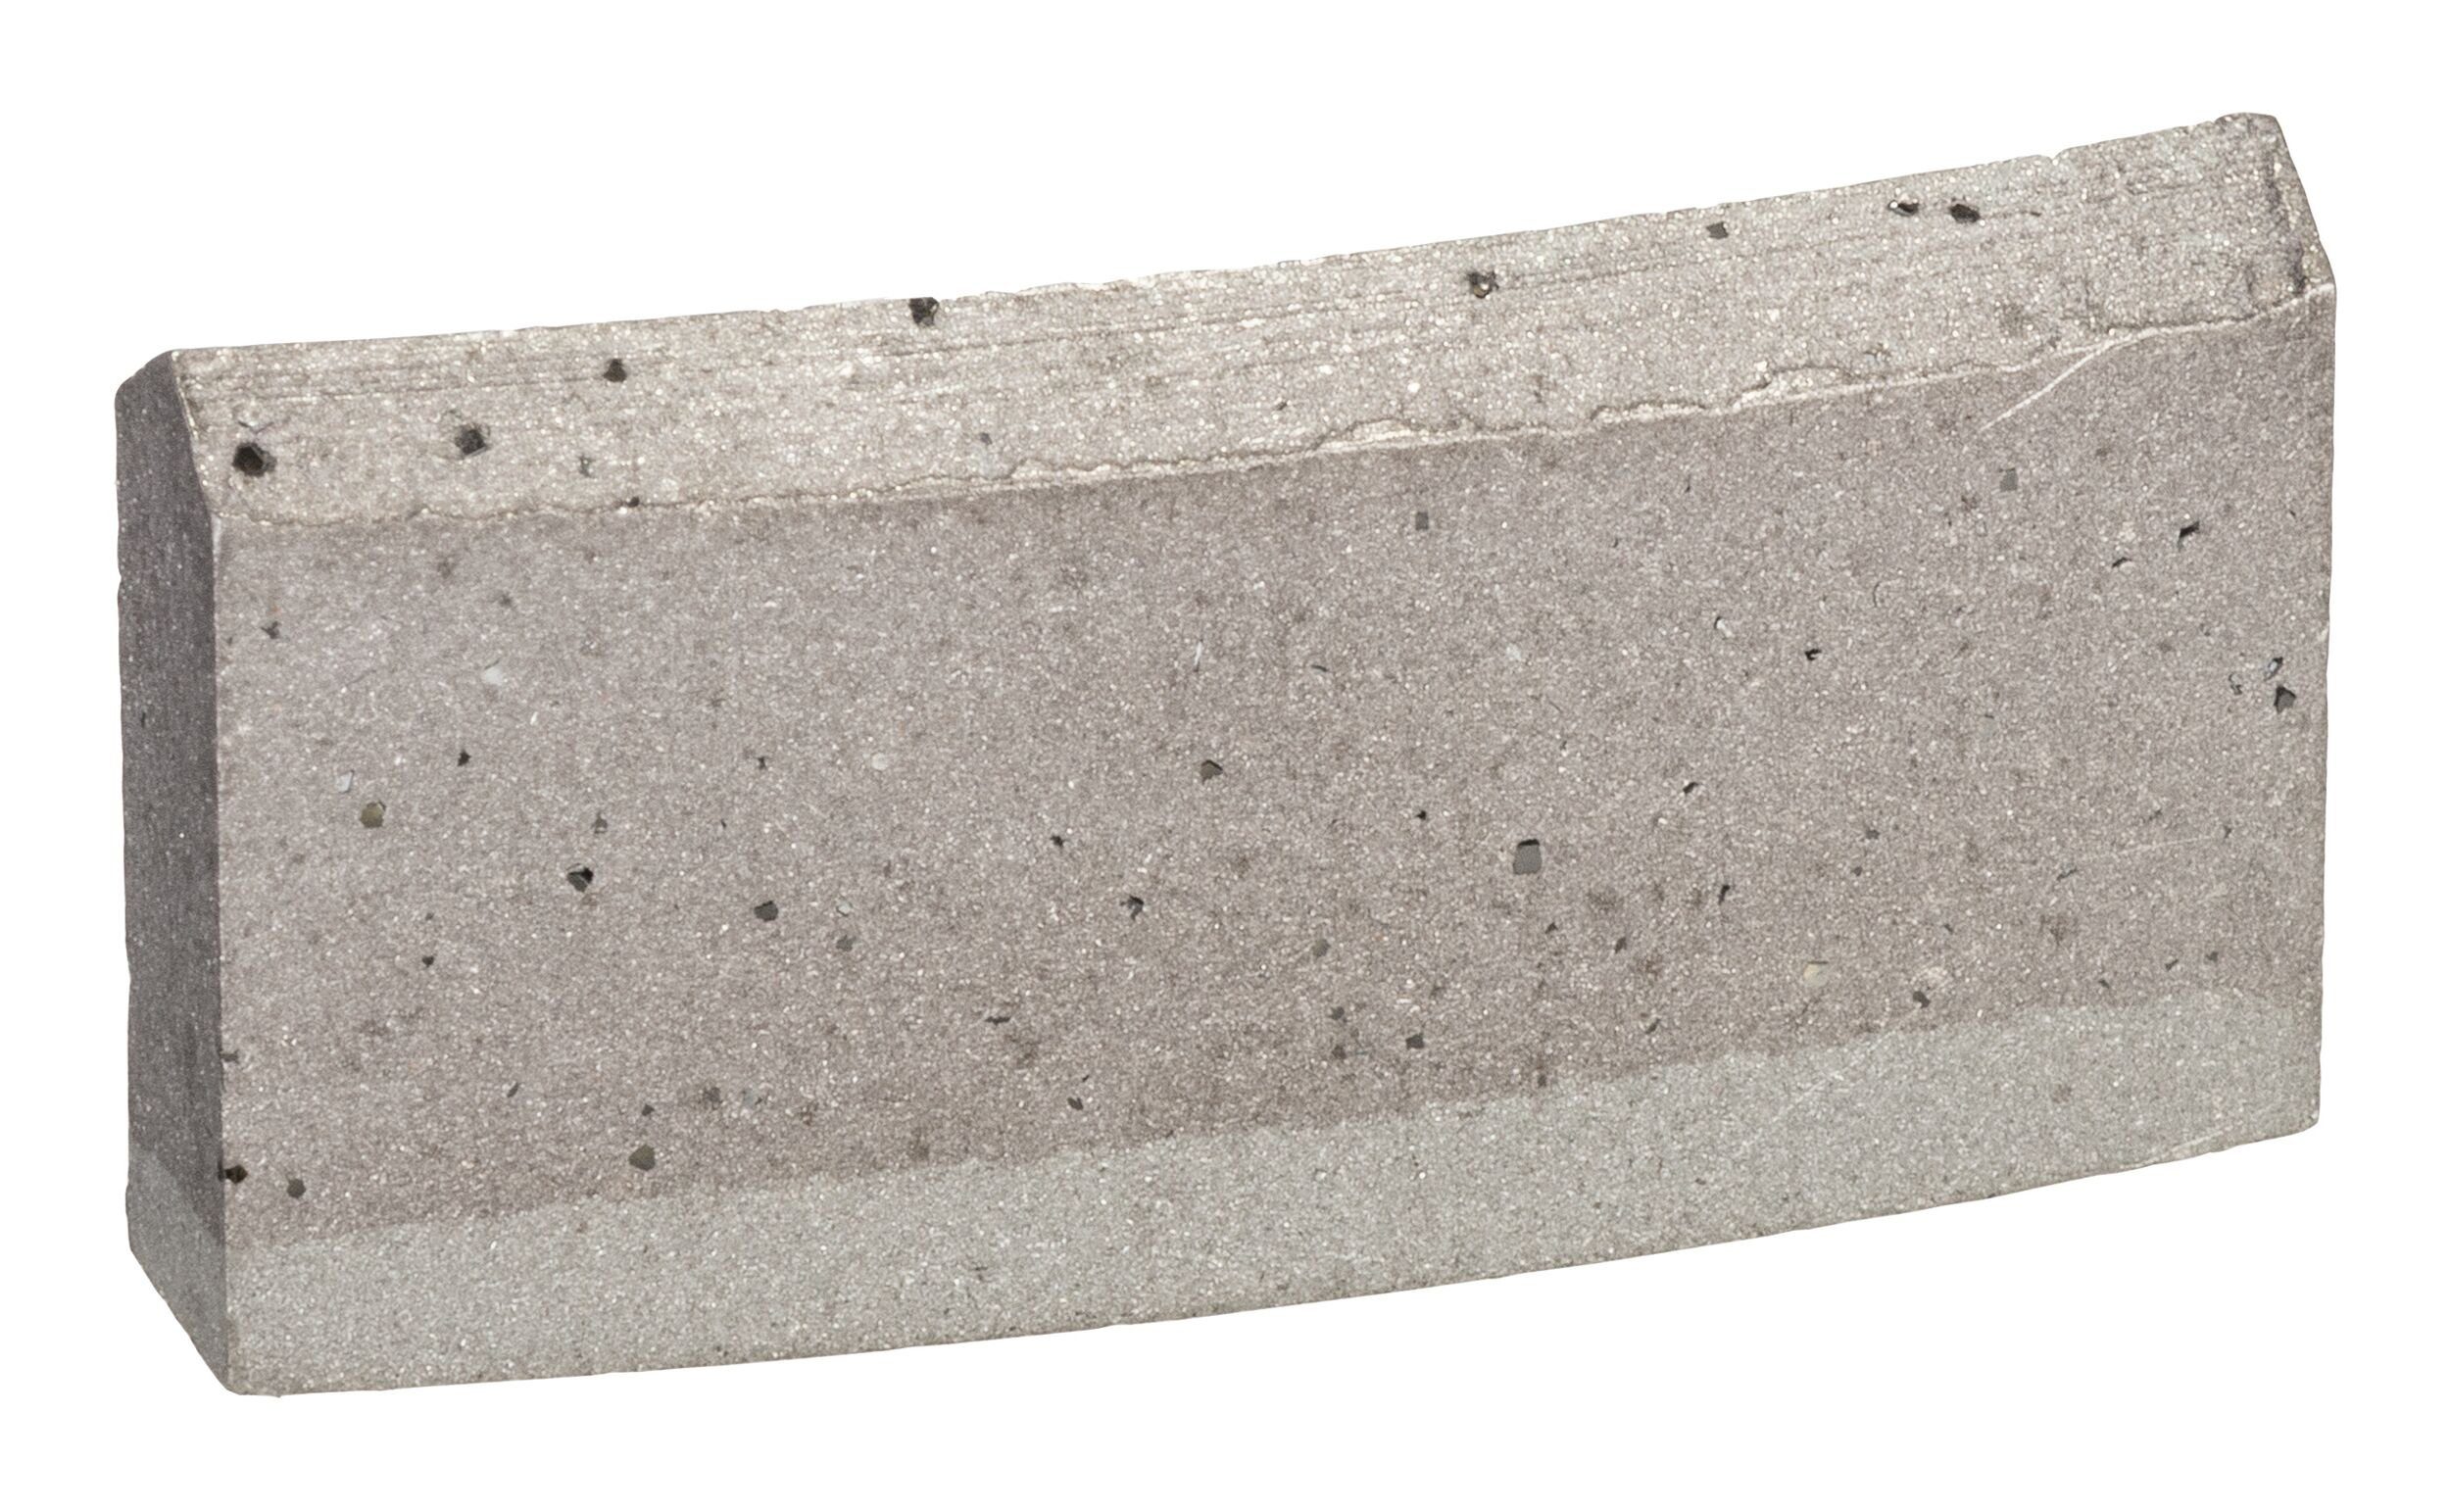 BOSCH f. Concrete Segmente 1 1/4" Diamantbohrkronen Bohrkrone, 11 UNC for Best